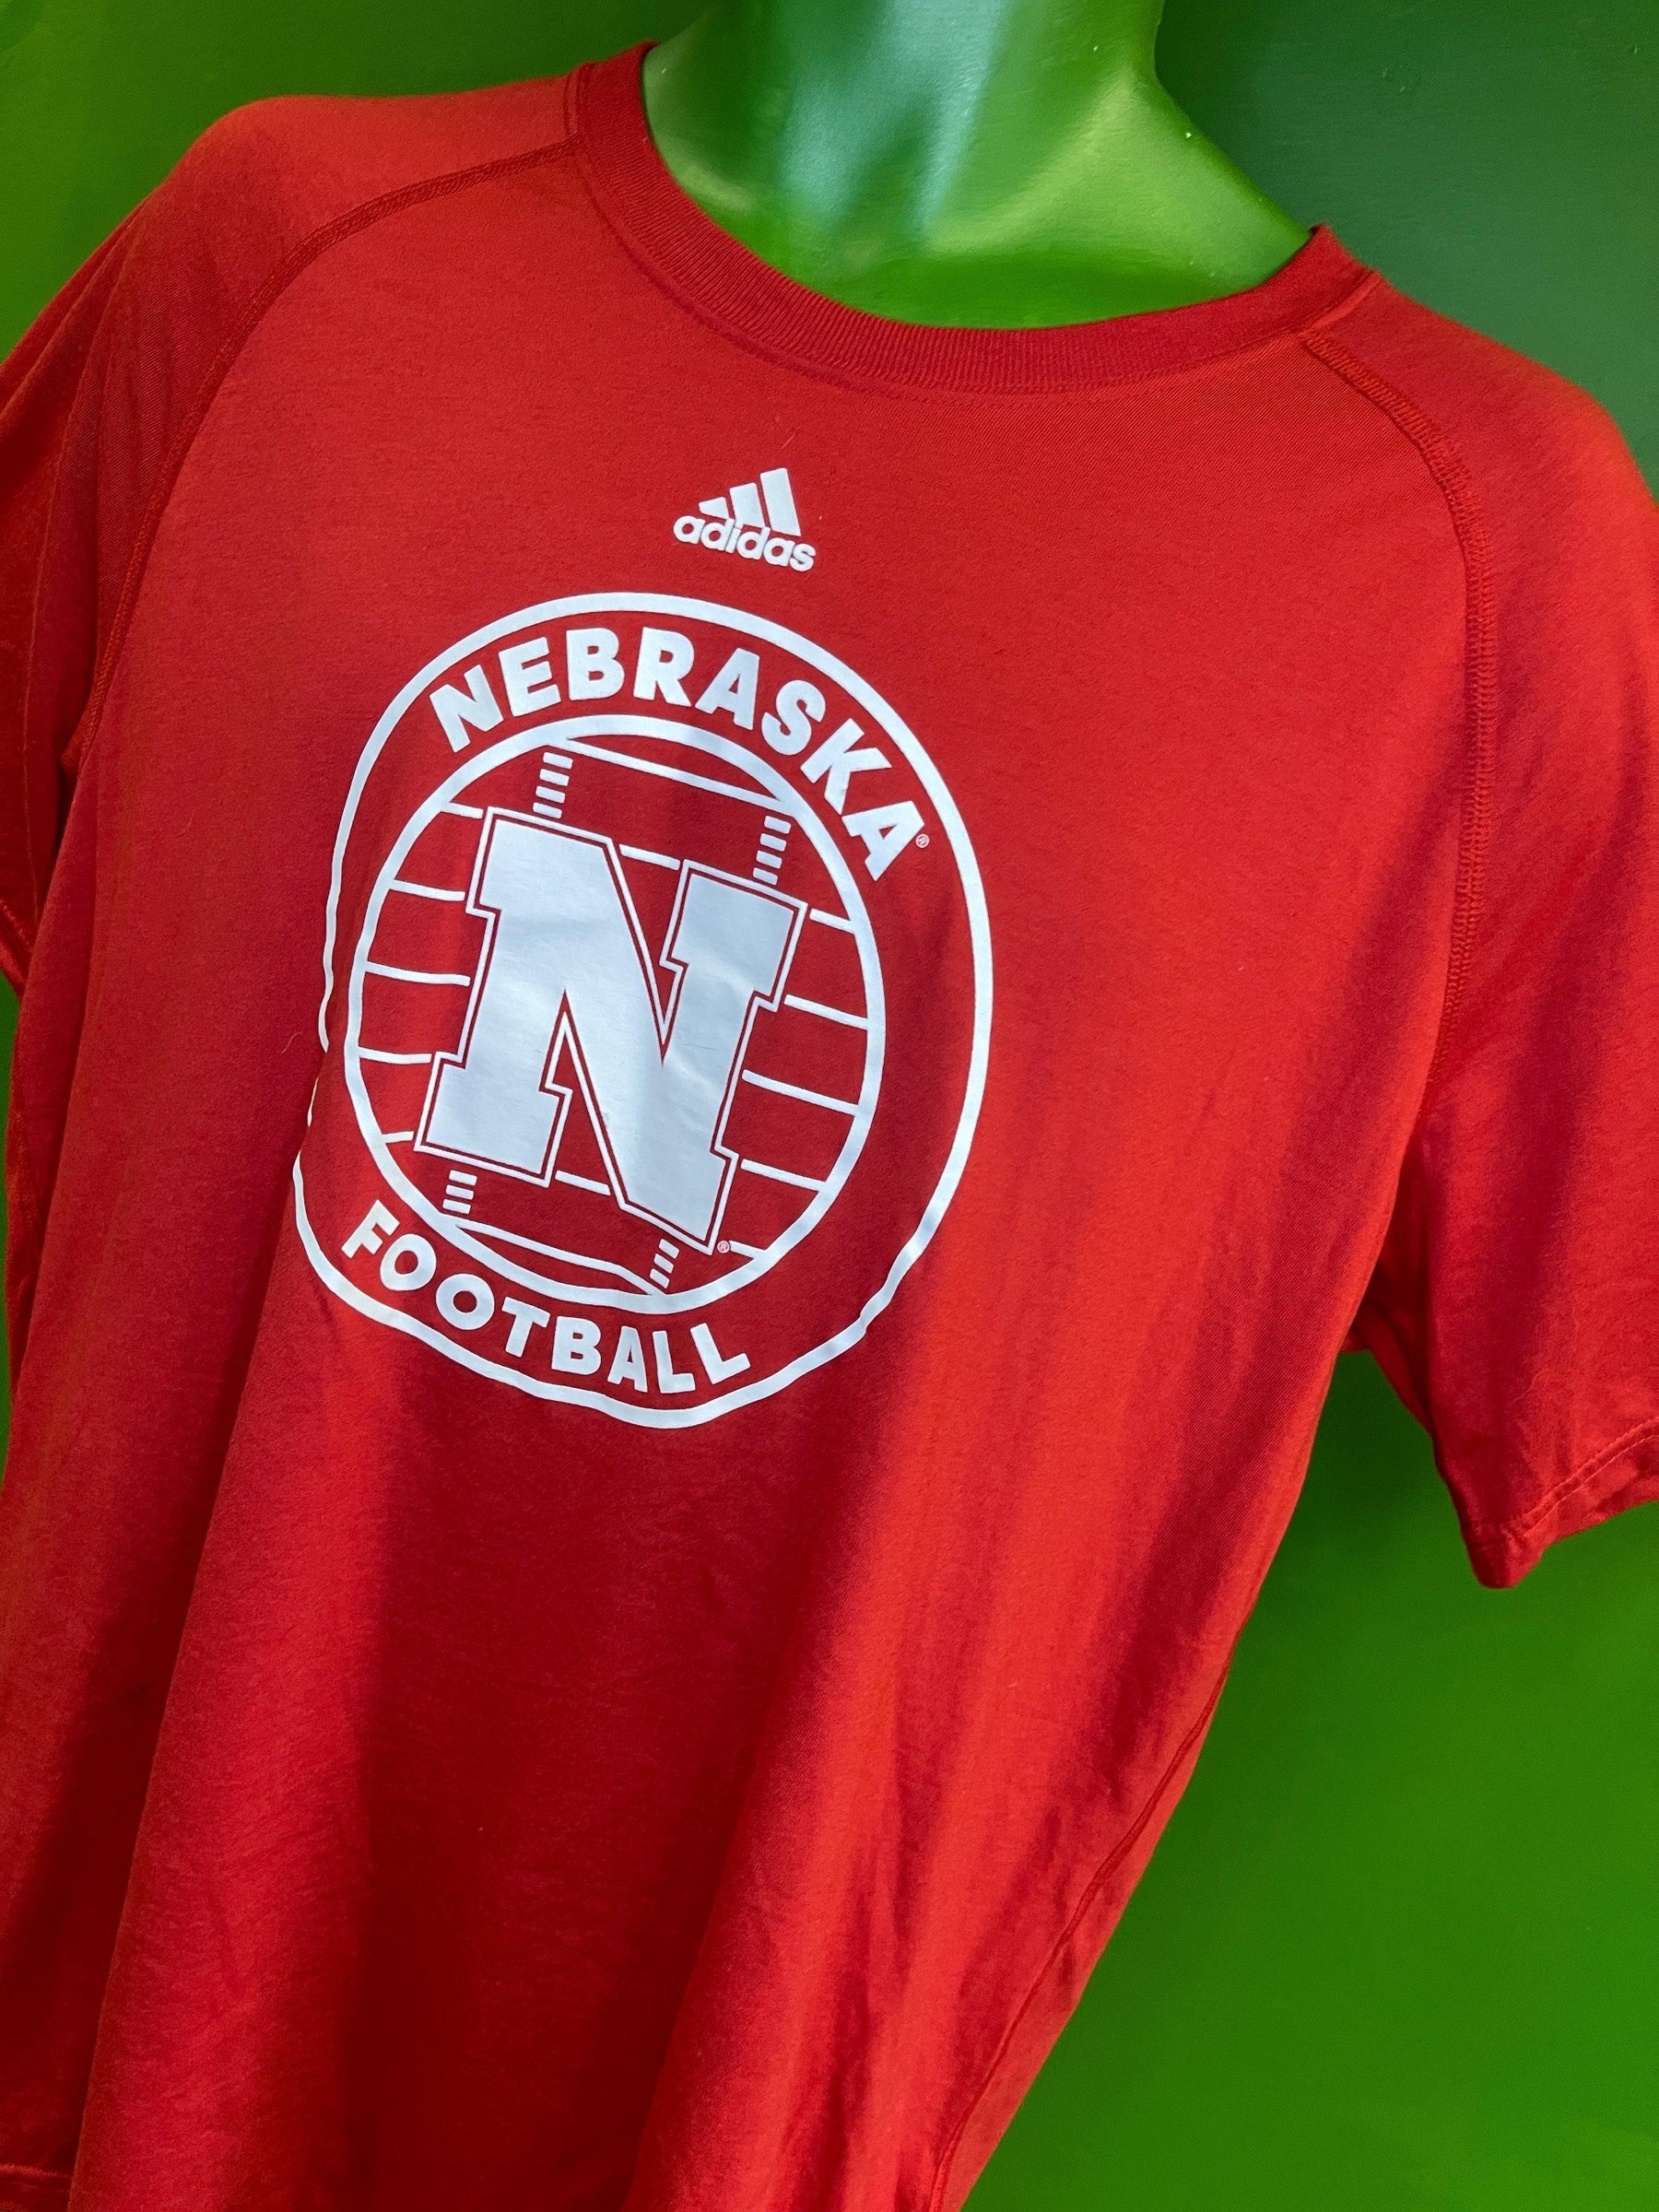 NCAA Nebraska Cornhuskers Adidas Red T-Shirt Men's X-Large NWT!